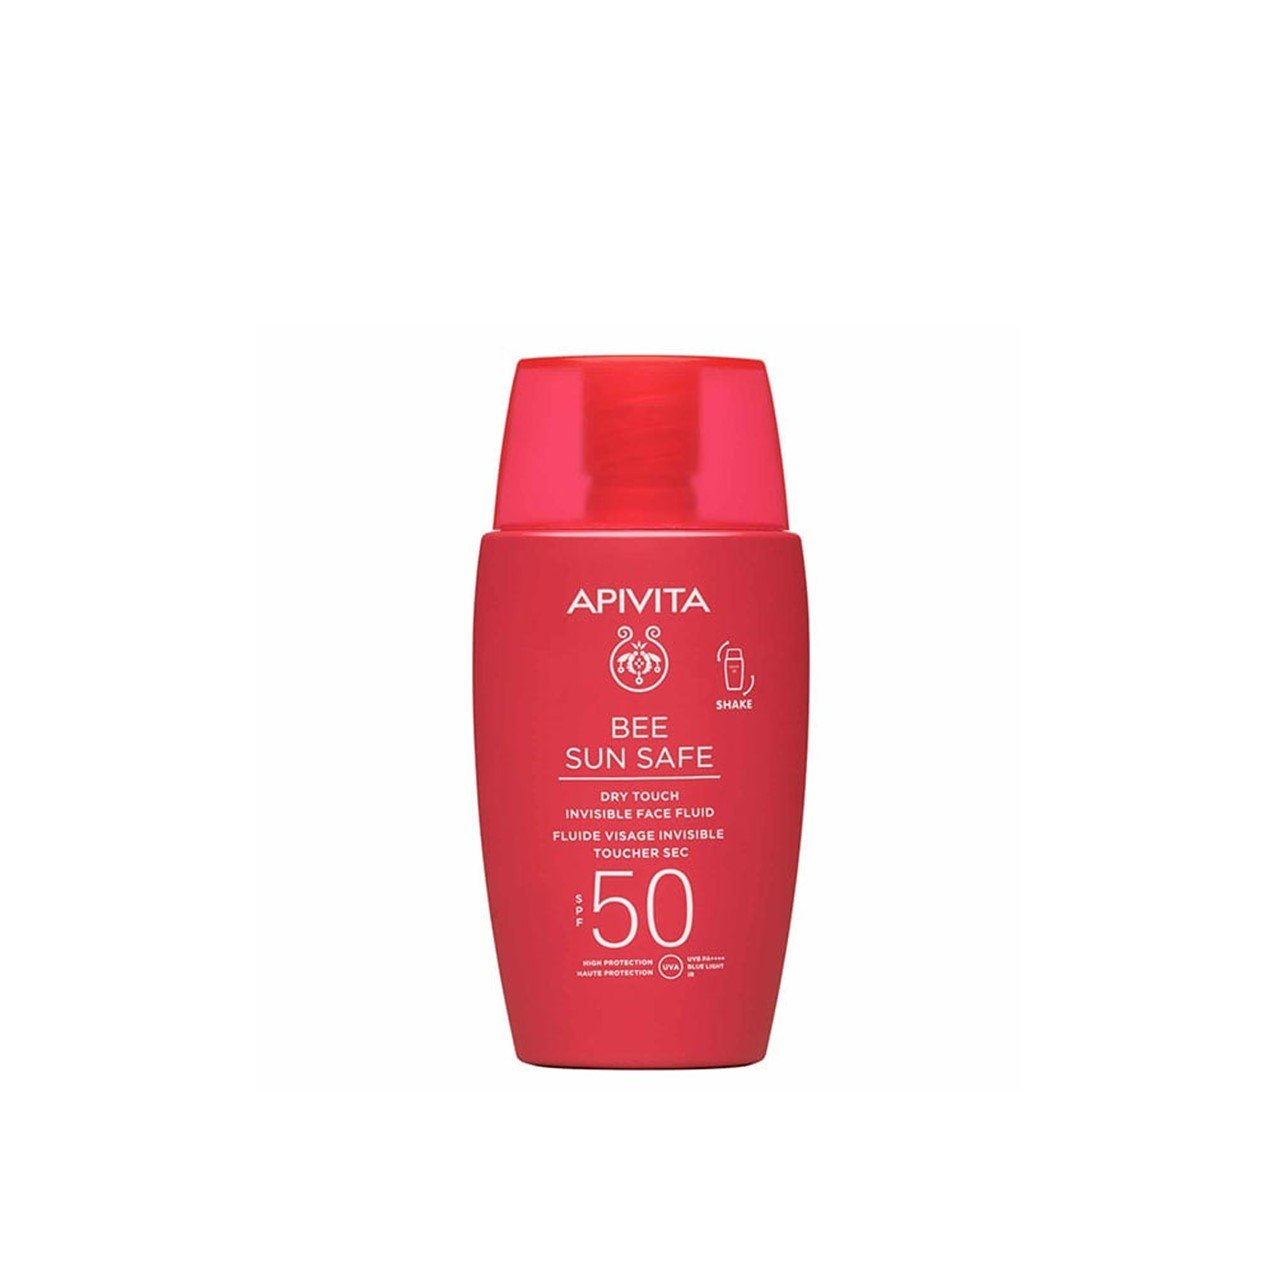 APIVITA Bee Sun Safe Dry Touch Invisible Face Fluid SPF50 50ml (1.69fl oz)